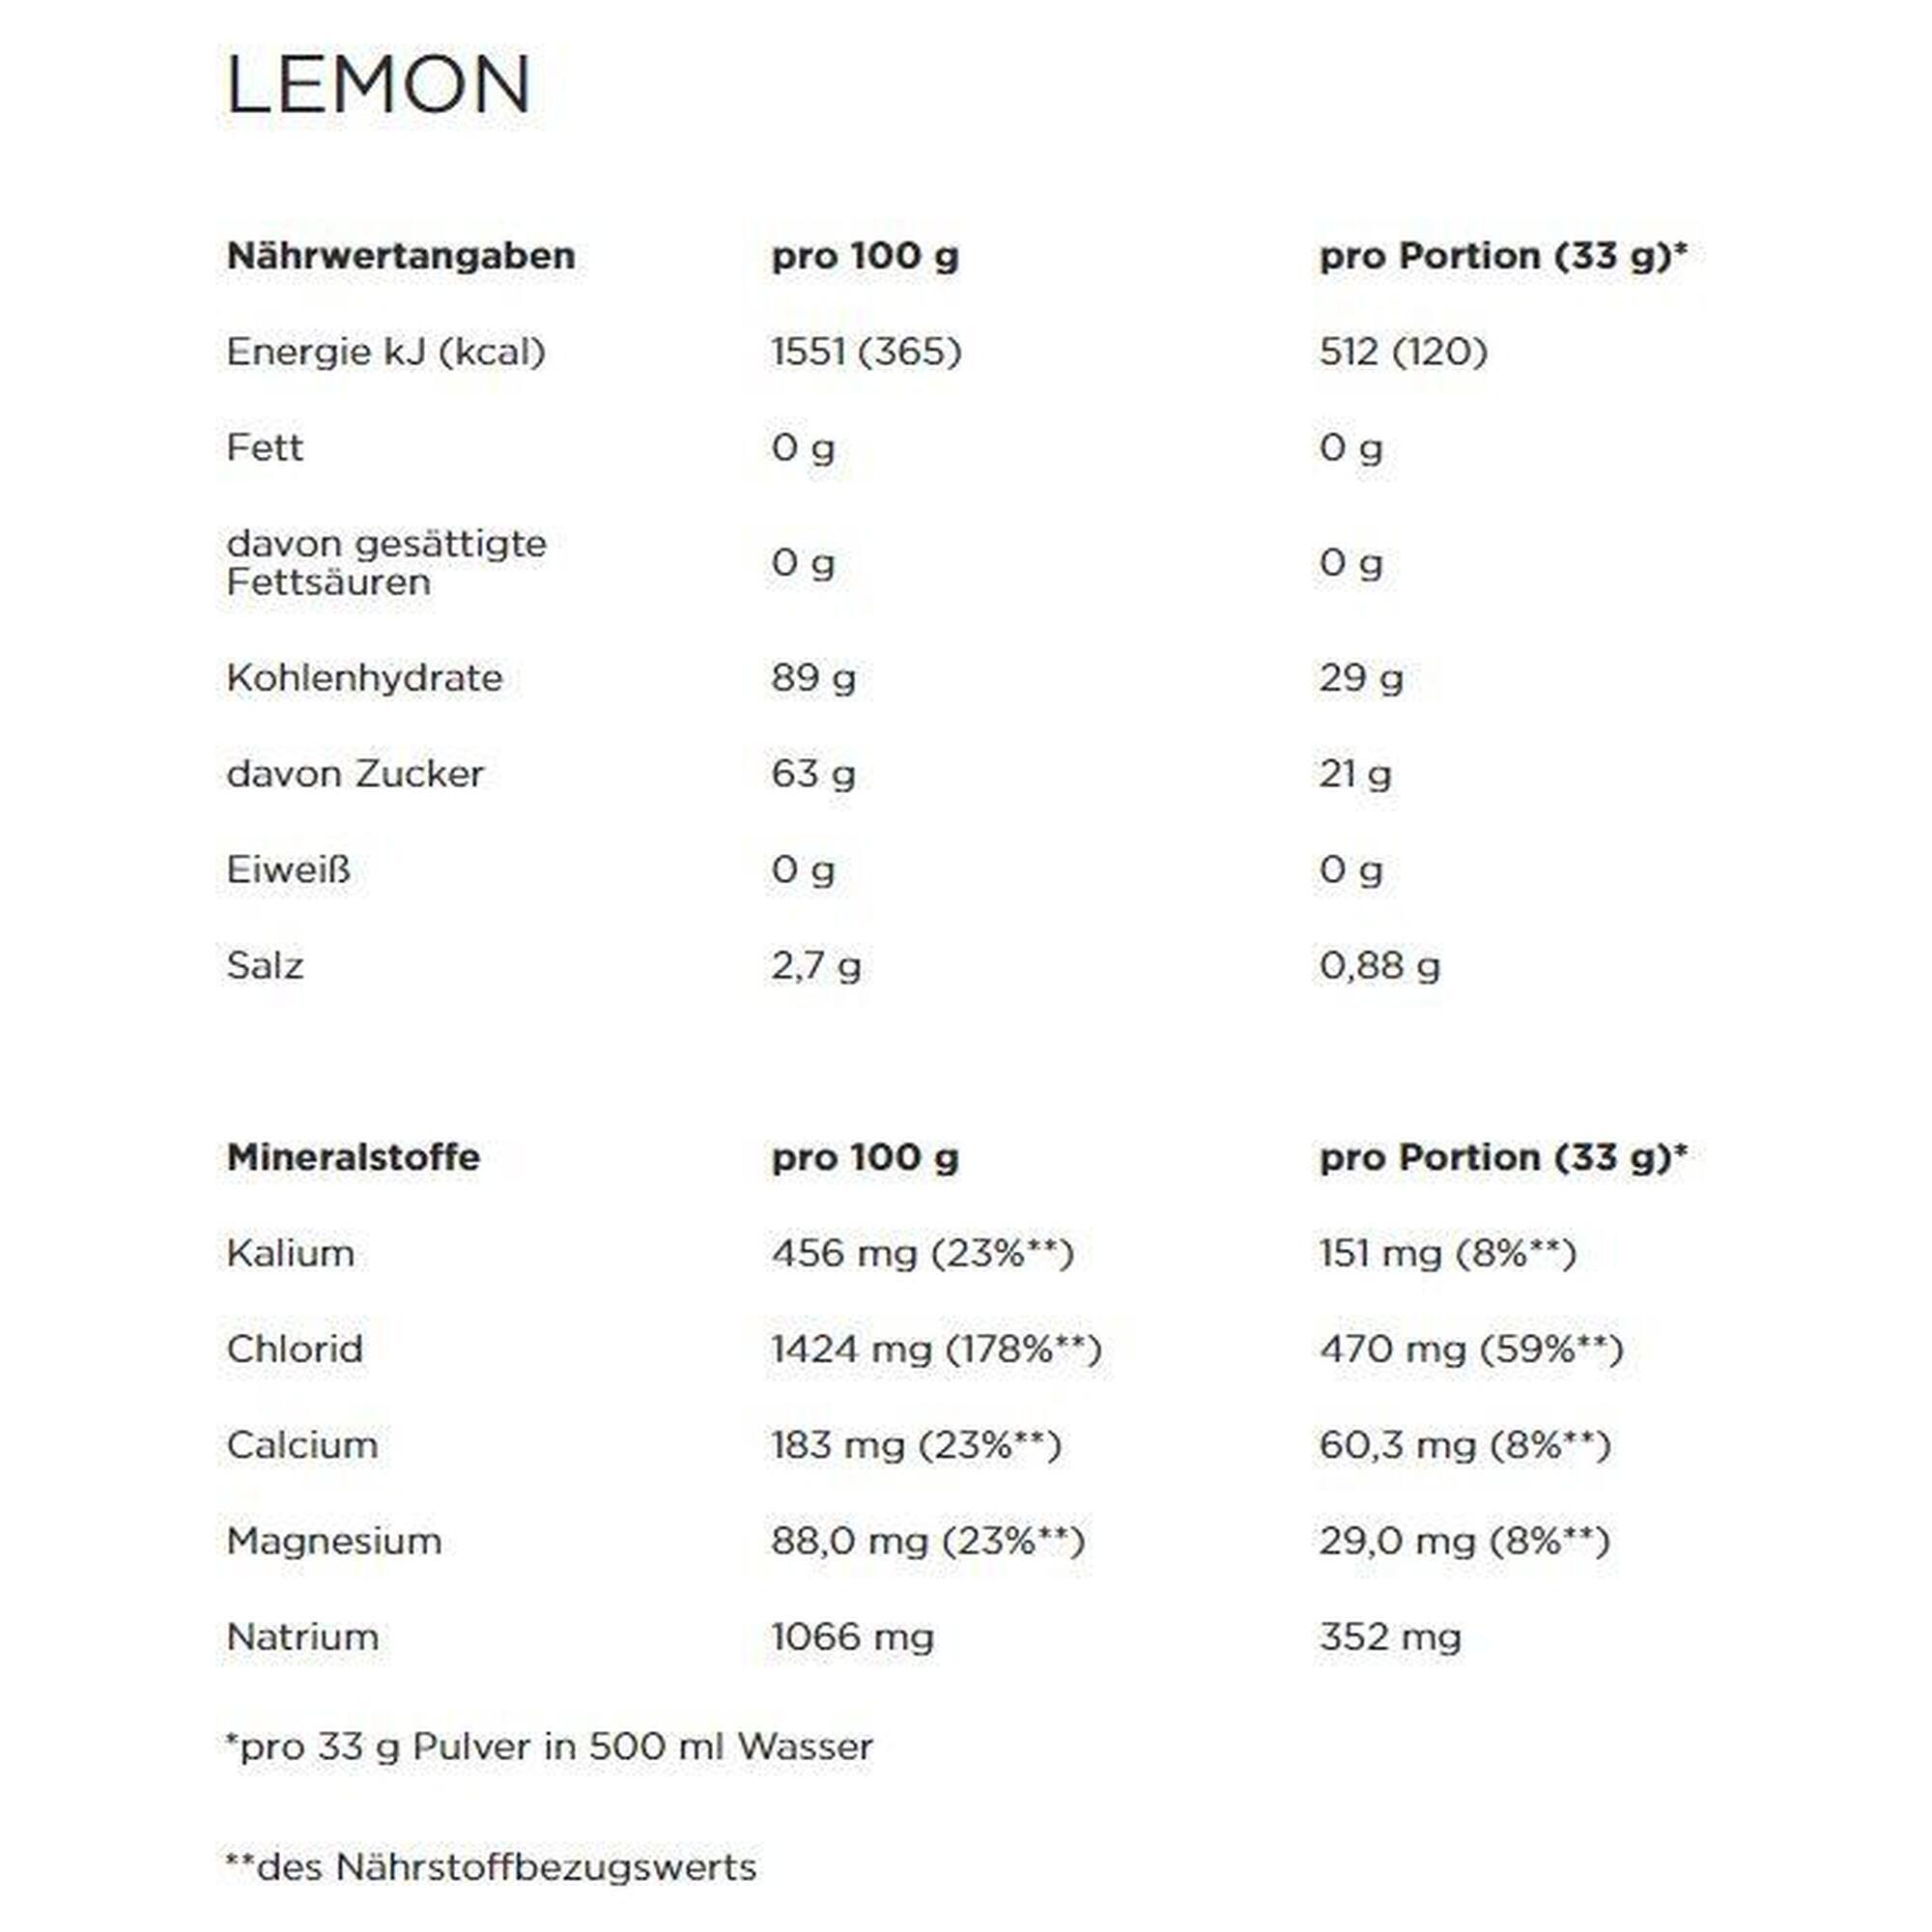 Powerbar Isoactive Lemon 600g - Isotonisches Sportgetränk - 5 Elektrolyte